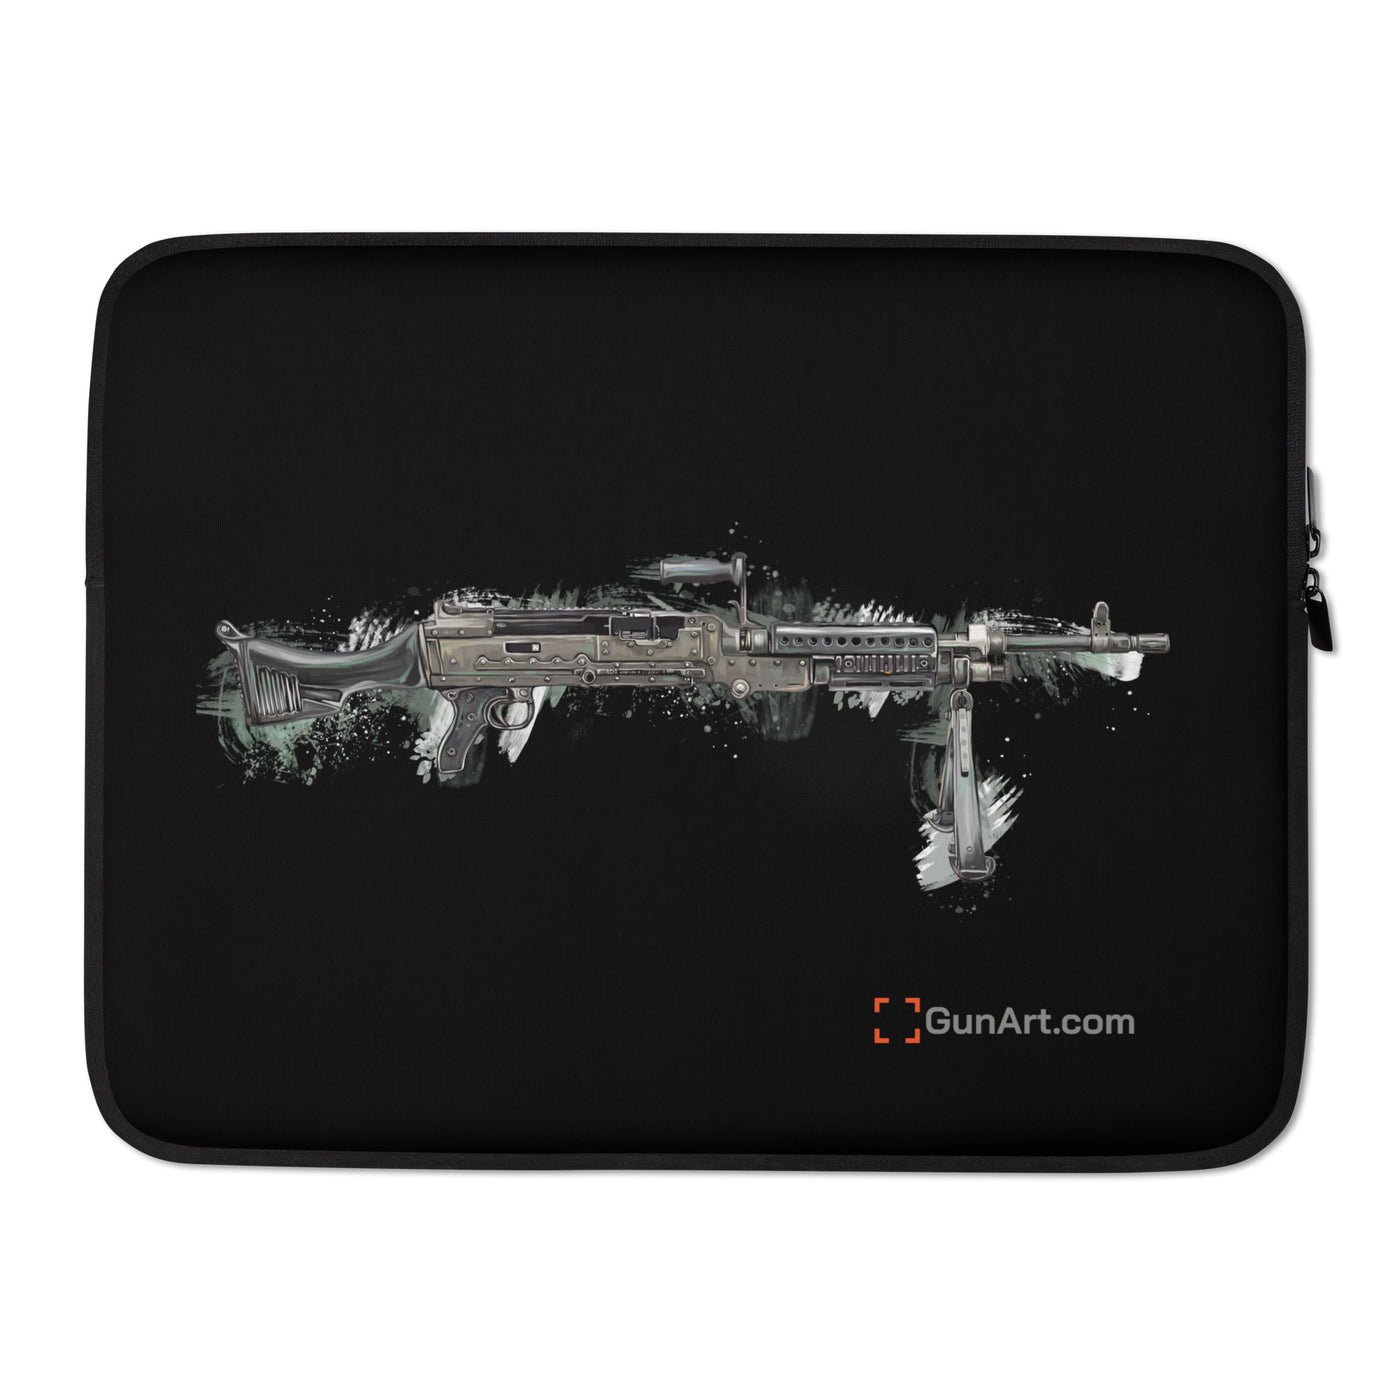 M240B - Belt Fed 7.62x51 Machine Gun Laptop Sleeve - Black Background